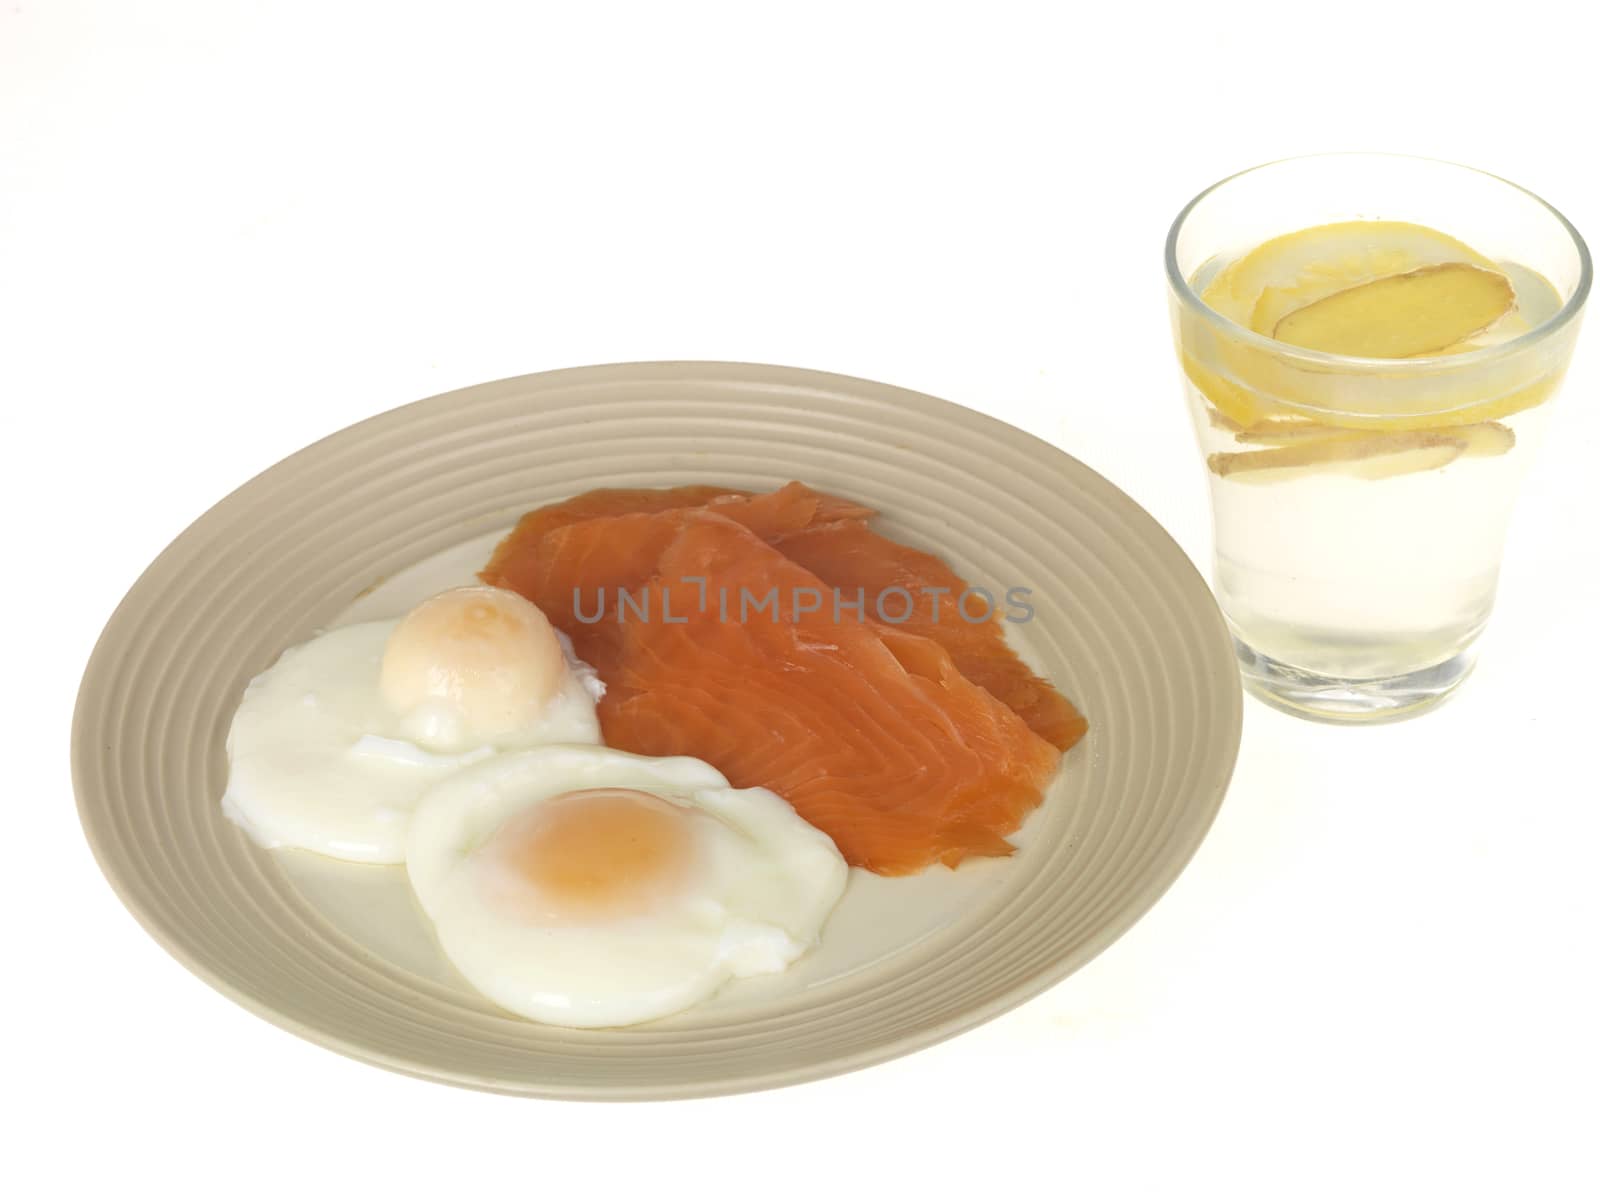 Poached Egg with Smoked Salmon